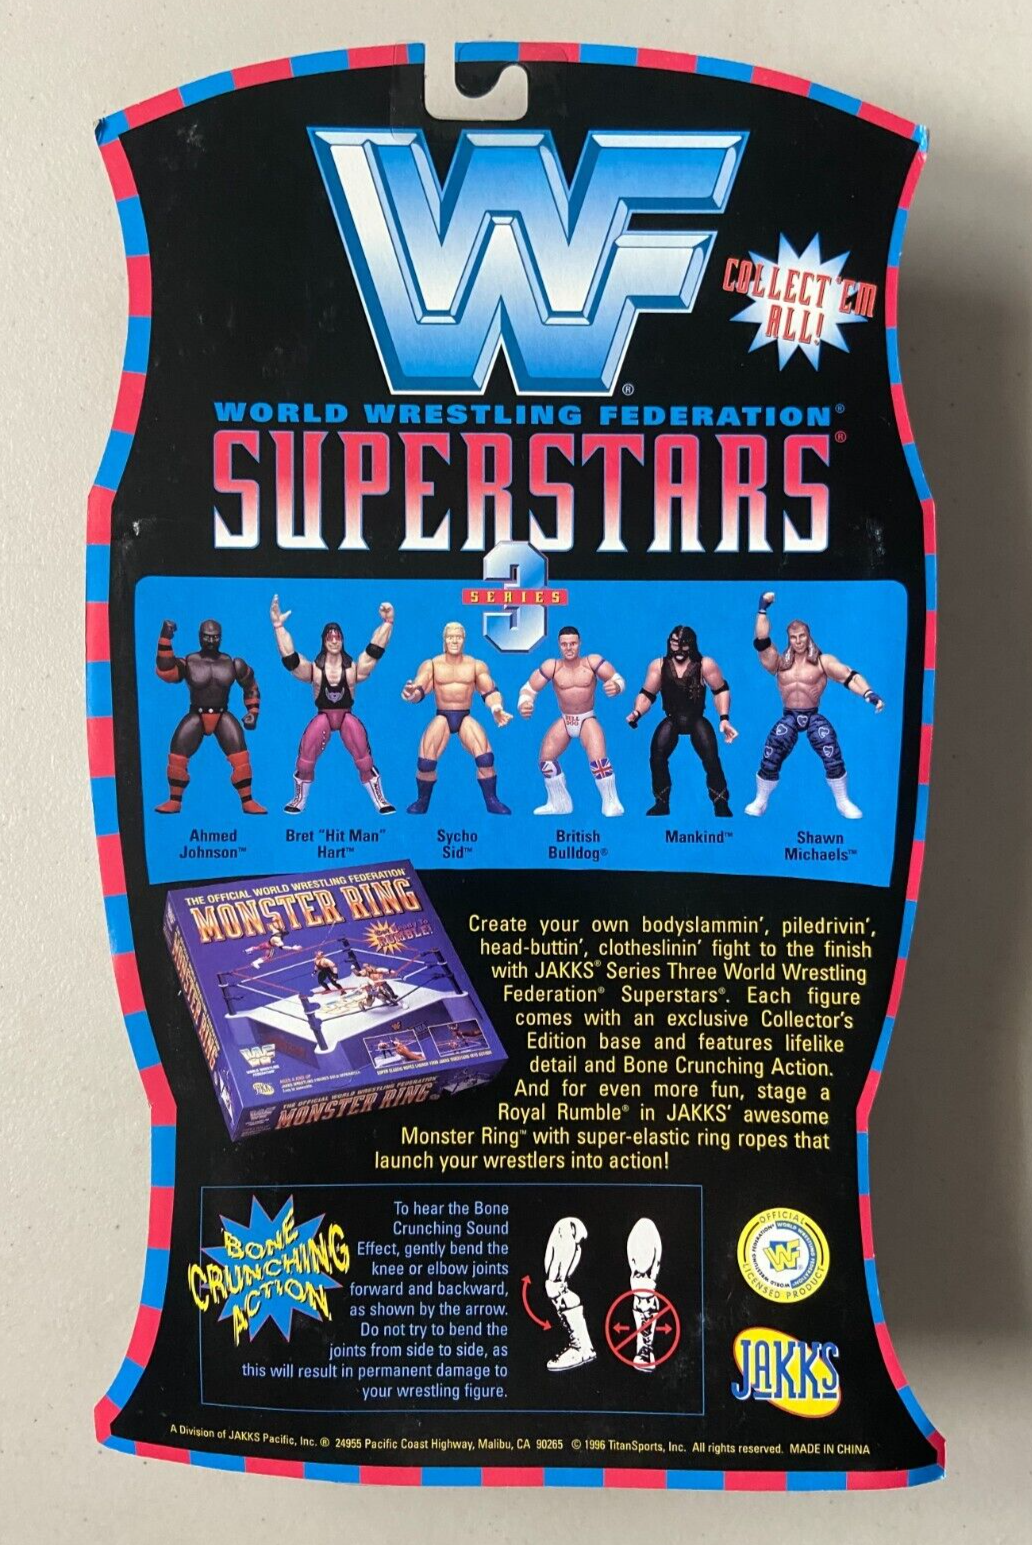 wwf superstars logo